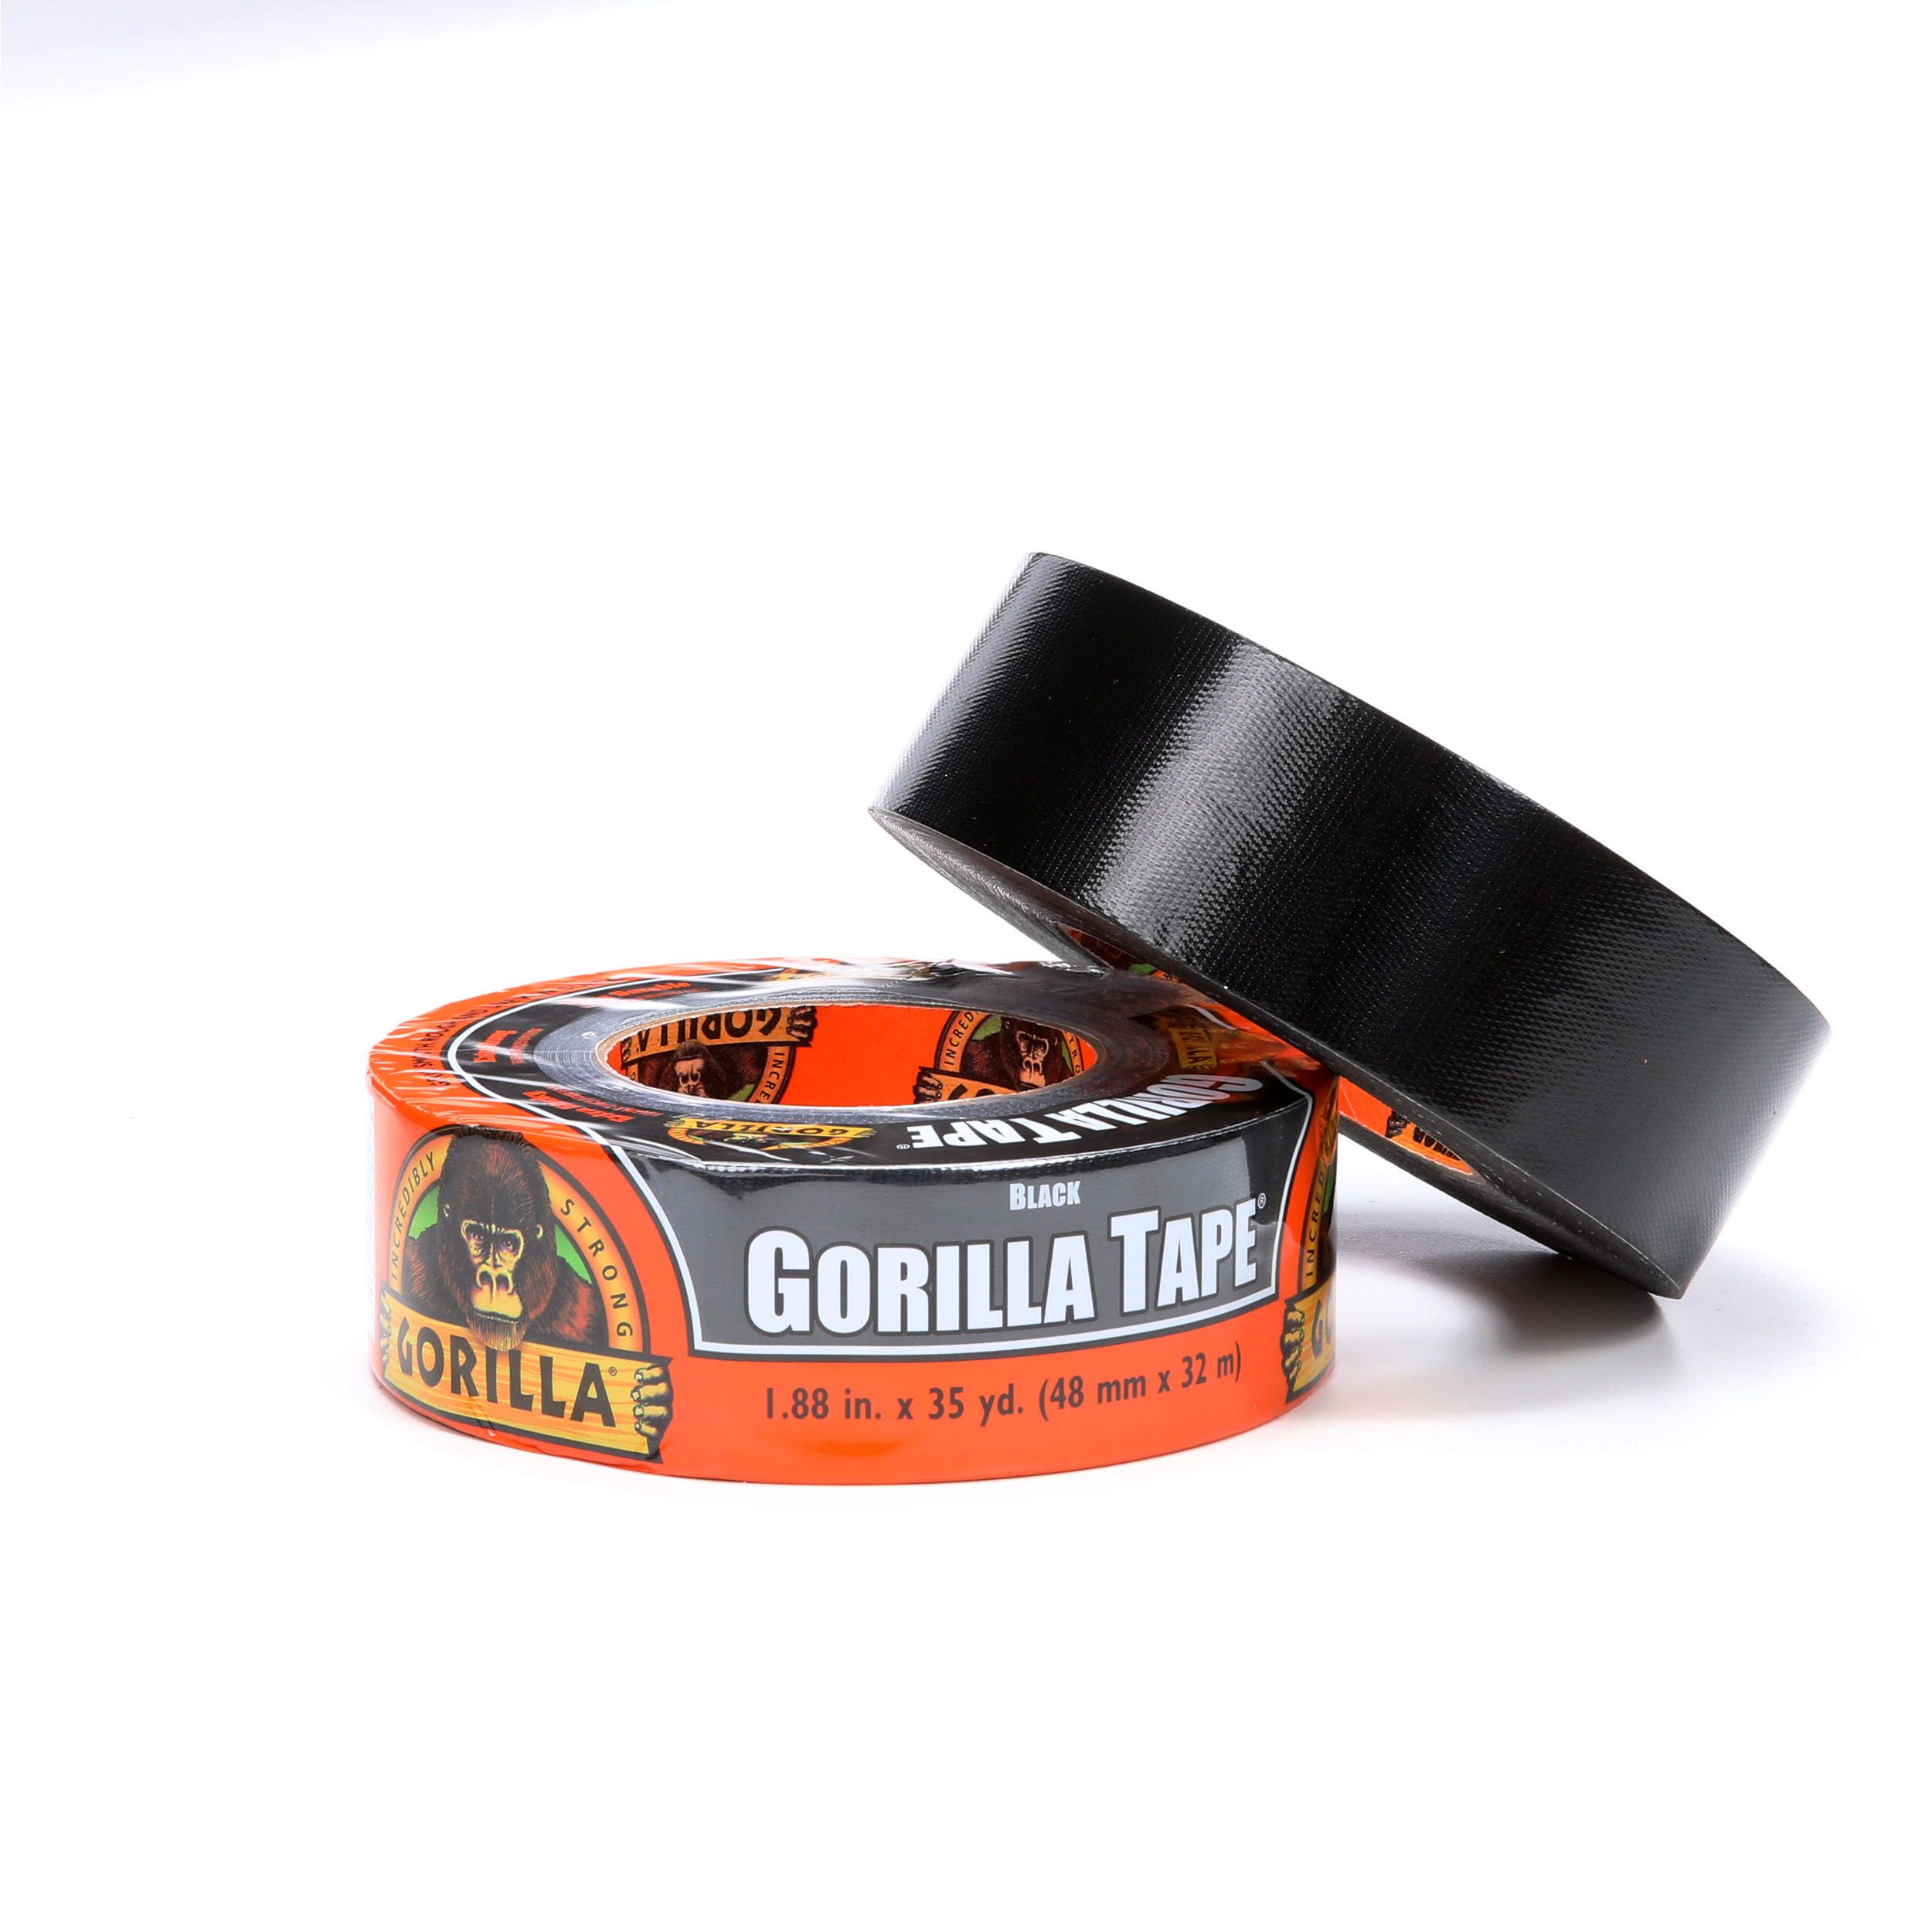 Black Duct Tape Gorilla Tape Black, 1.88" x 35 yd Pack of 2 